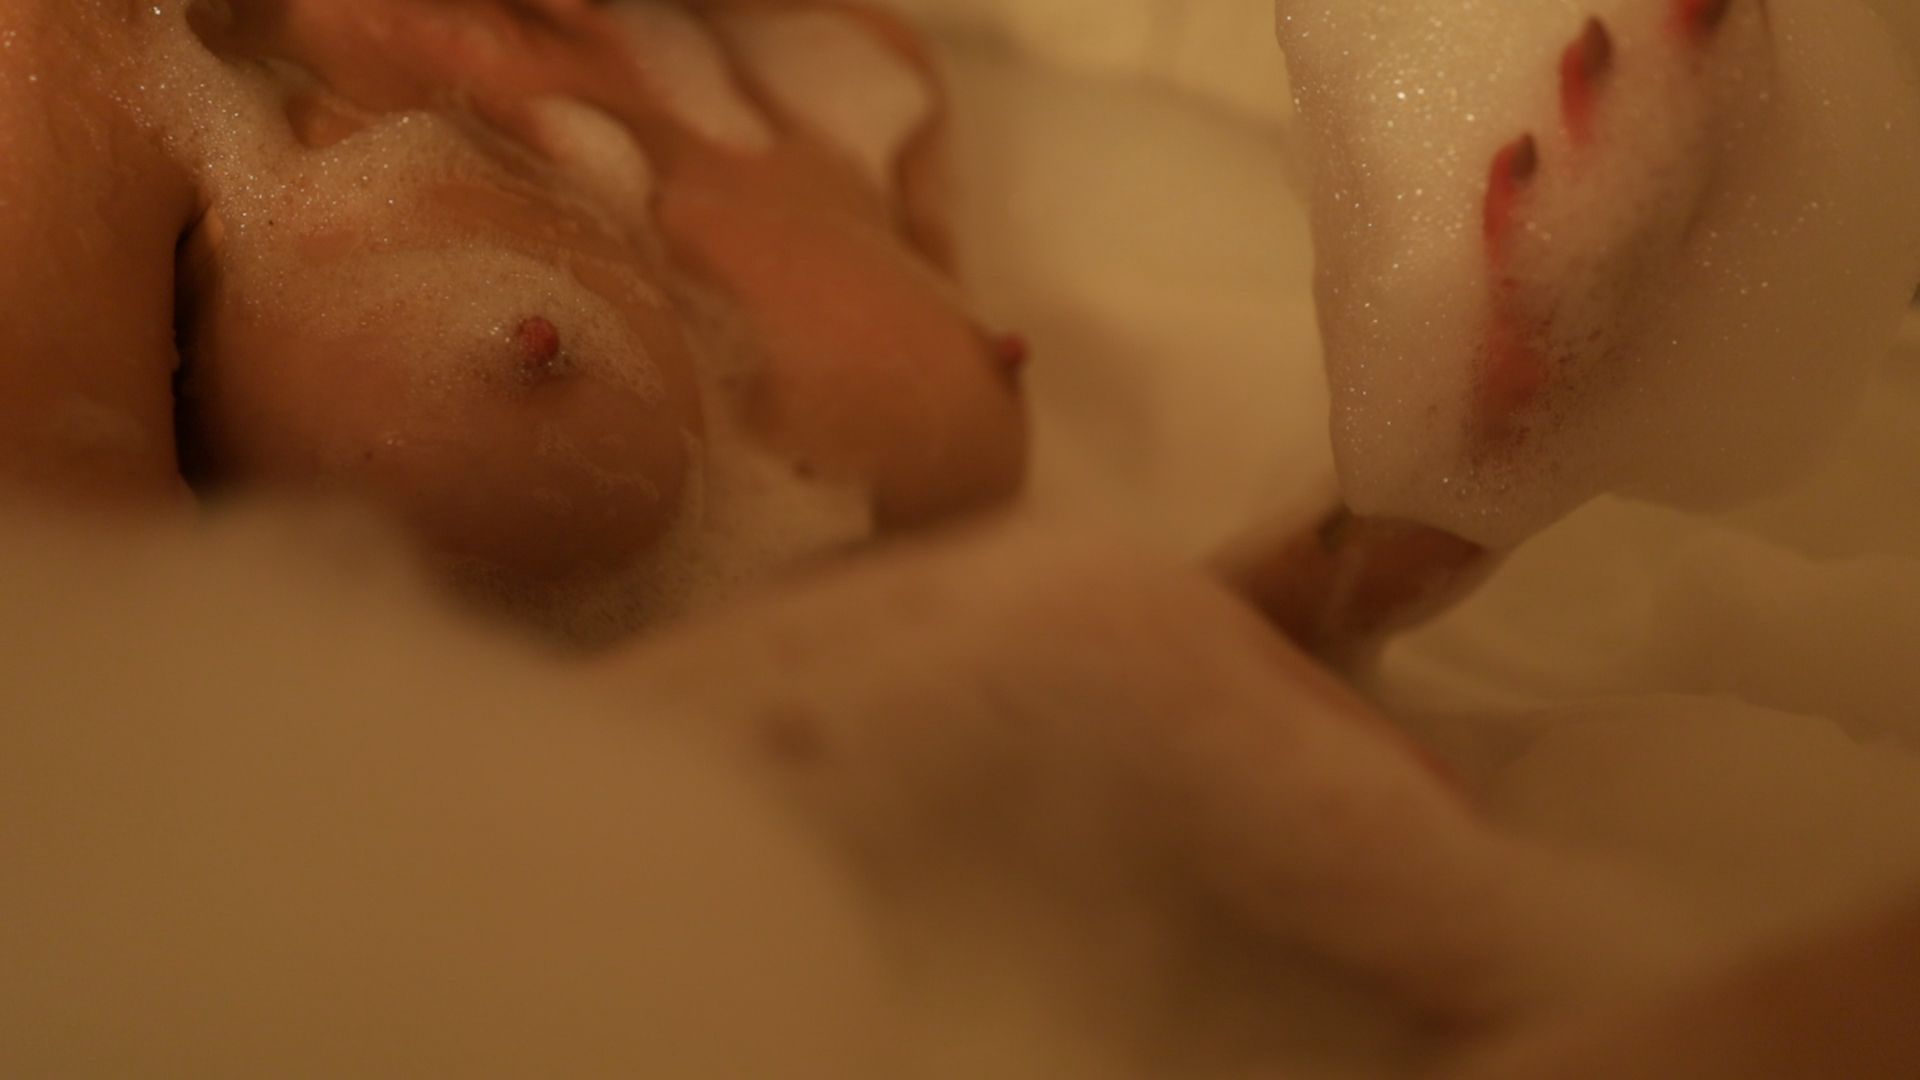 Alex shai nude youtuber bathing photos